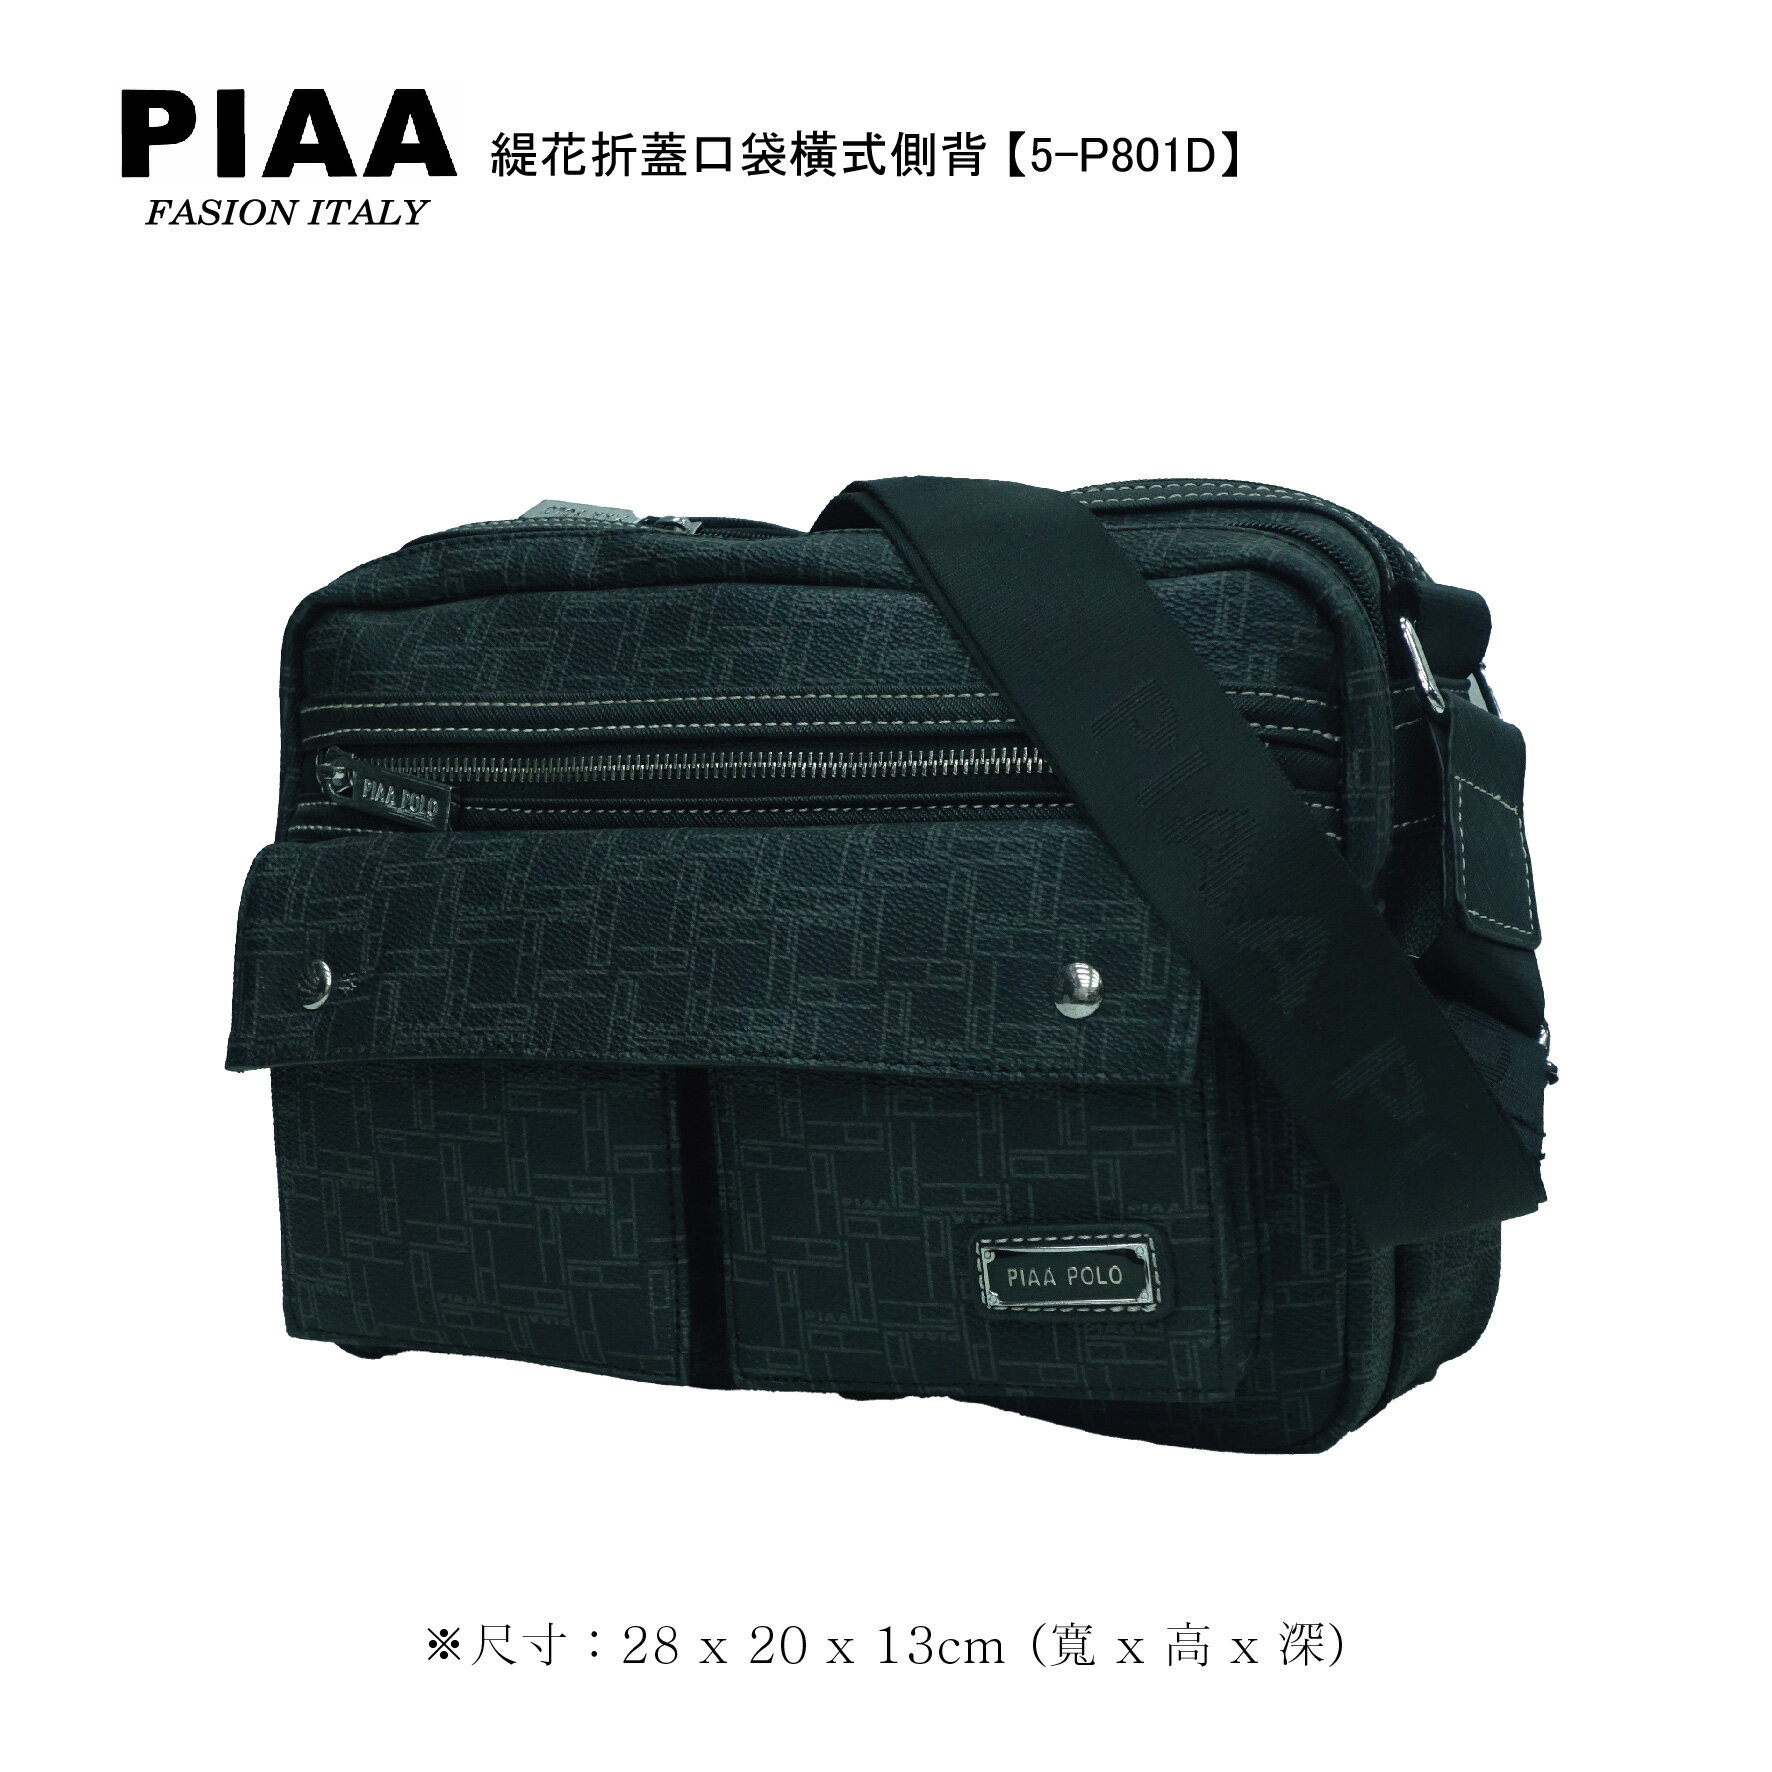 5-P801D【PIAA POLO 皮亞 保羅】緹花折蓋口袋橫式側背